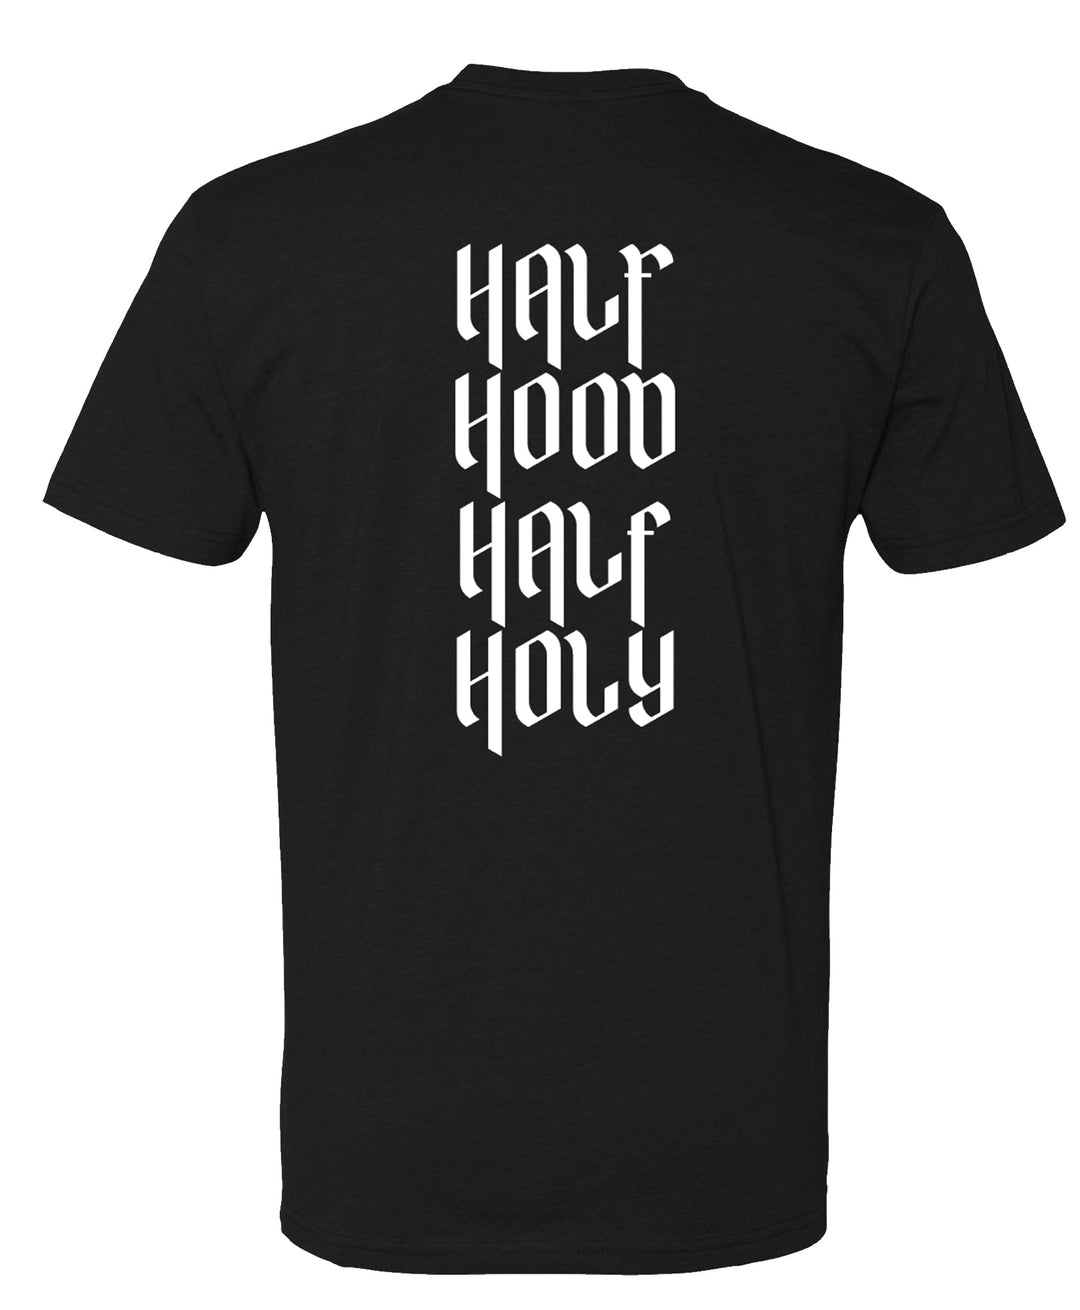 "Half Hood, Half Holy" T-Shirt